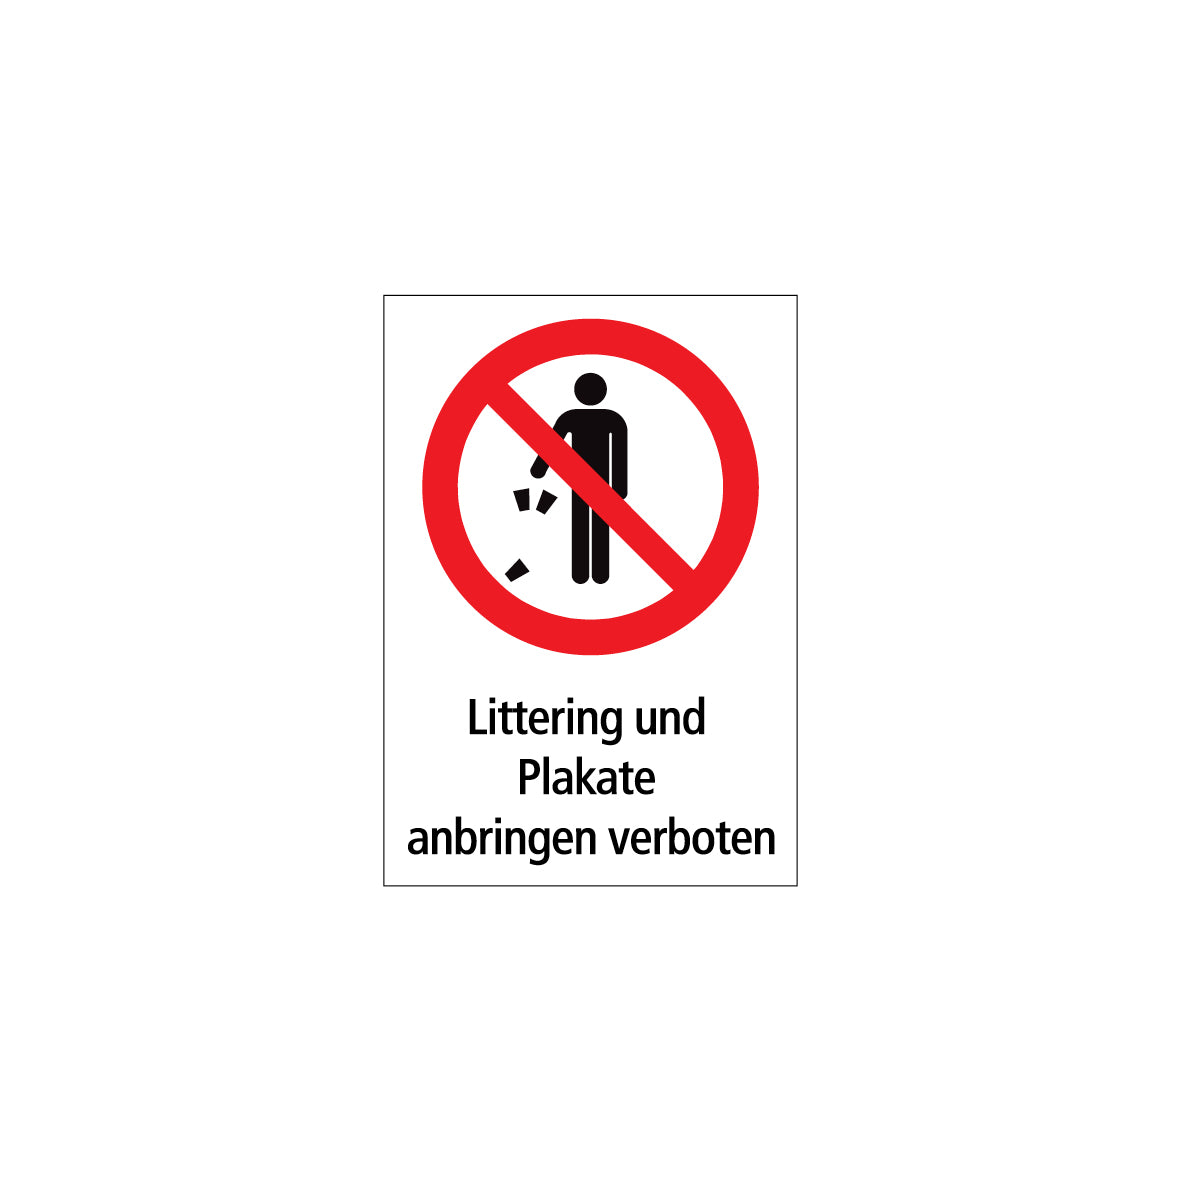 6.V-128 Littering und Plakate anbringen verboten, Verbotszeichen, Praxisbewährt